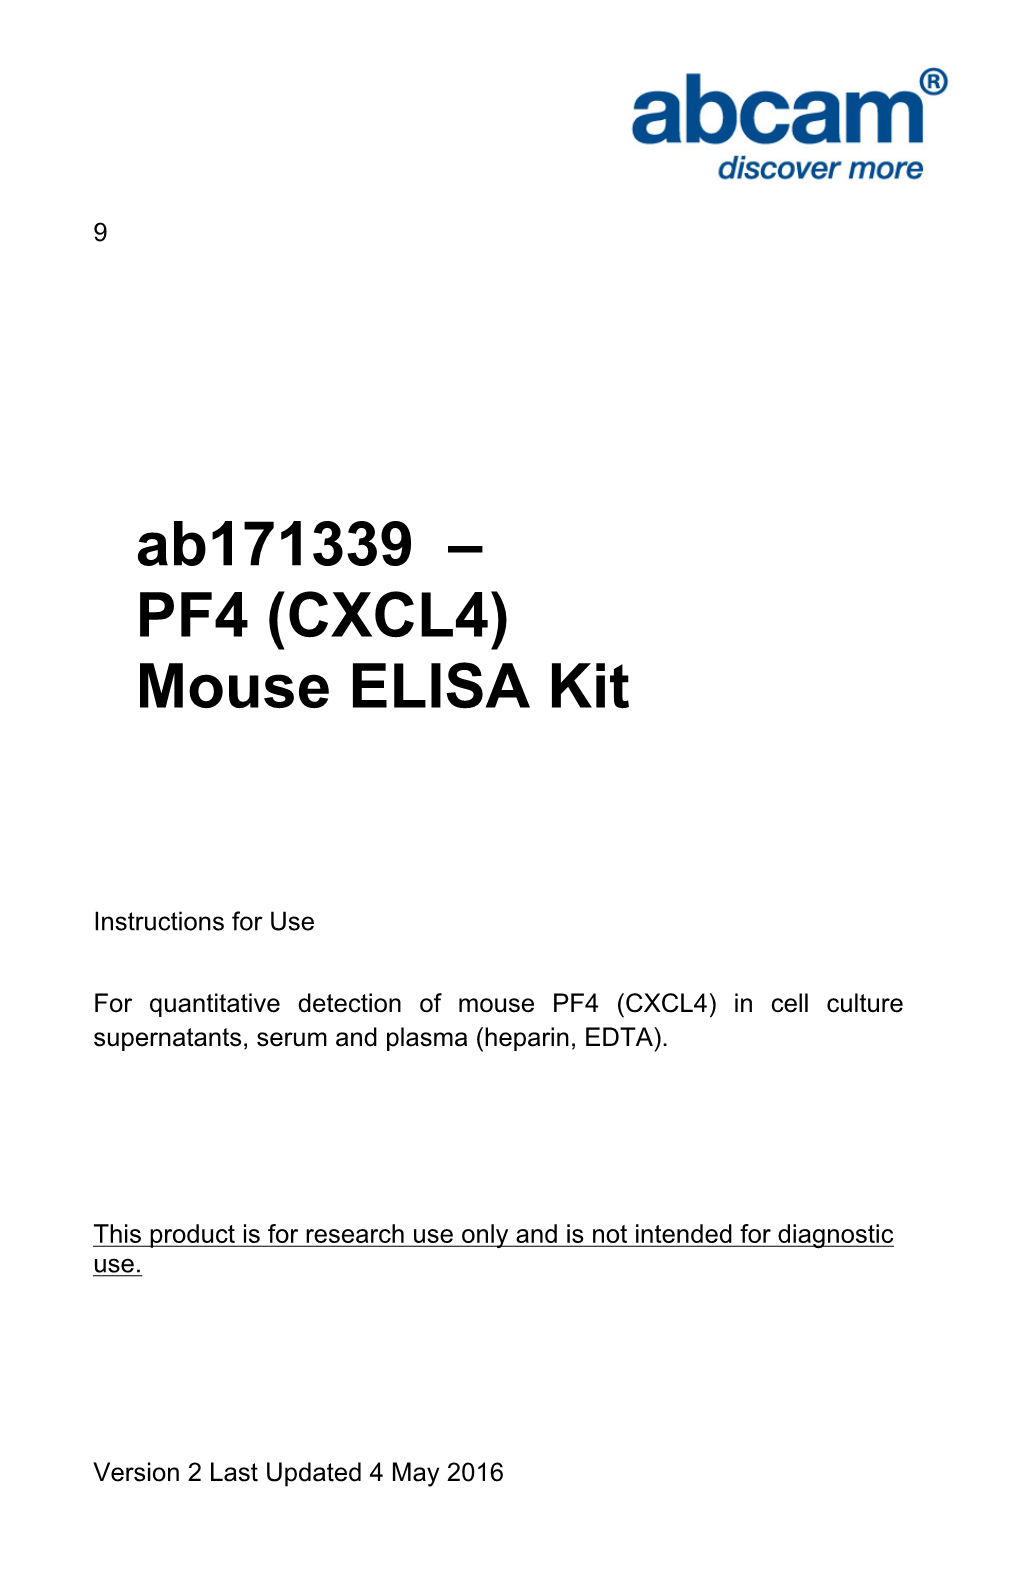 PF4 (CXCL4) Mouse ELISA Kit